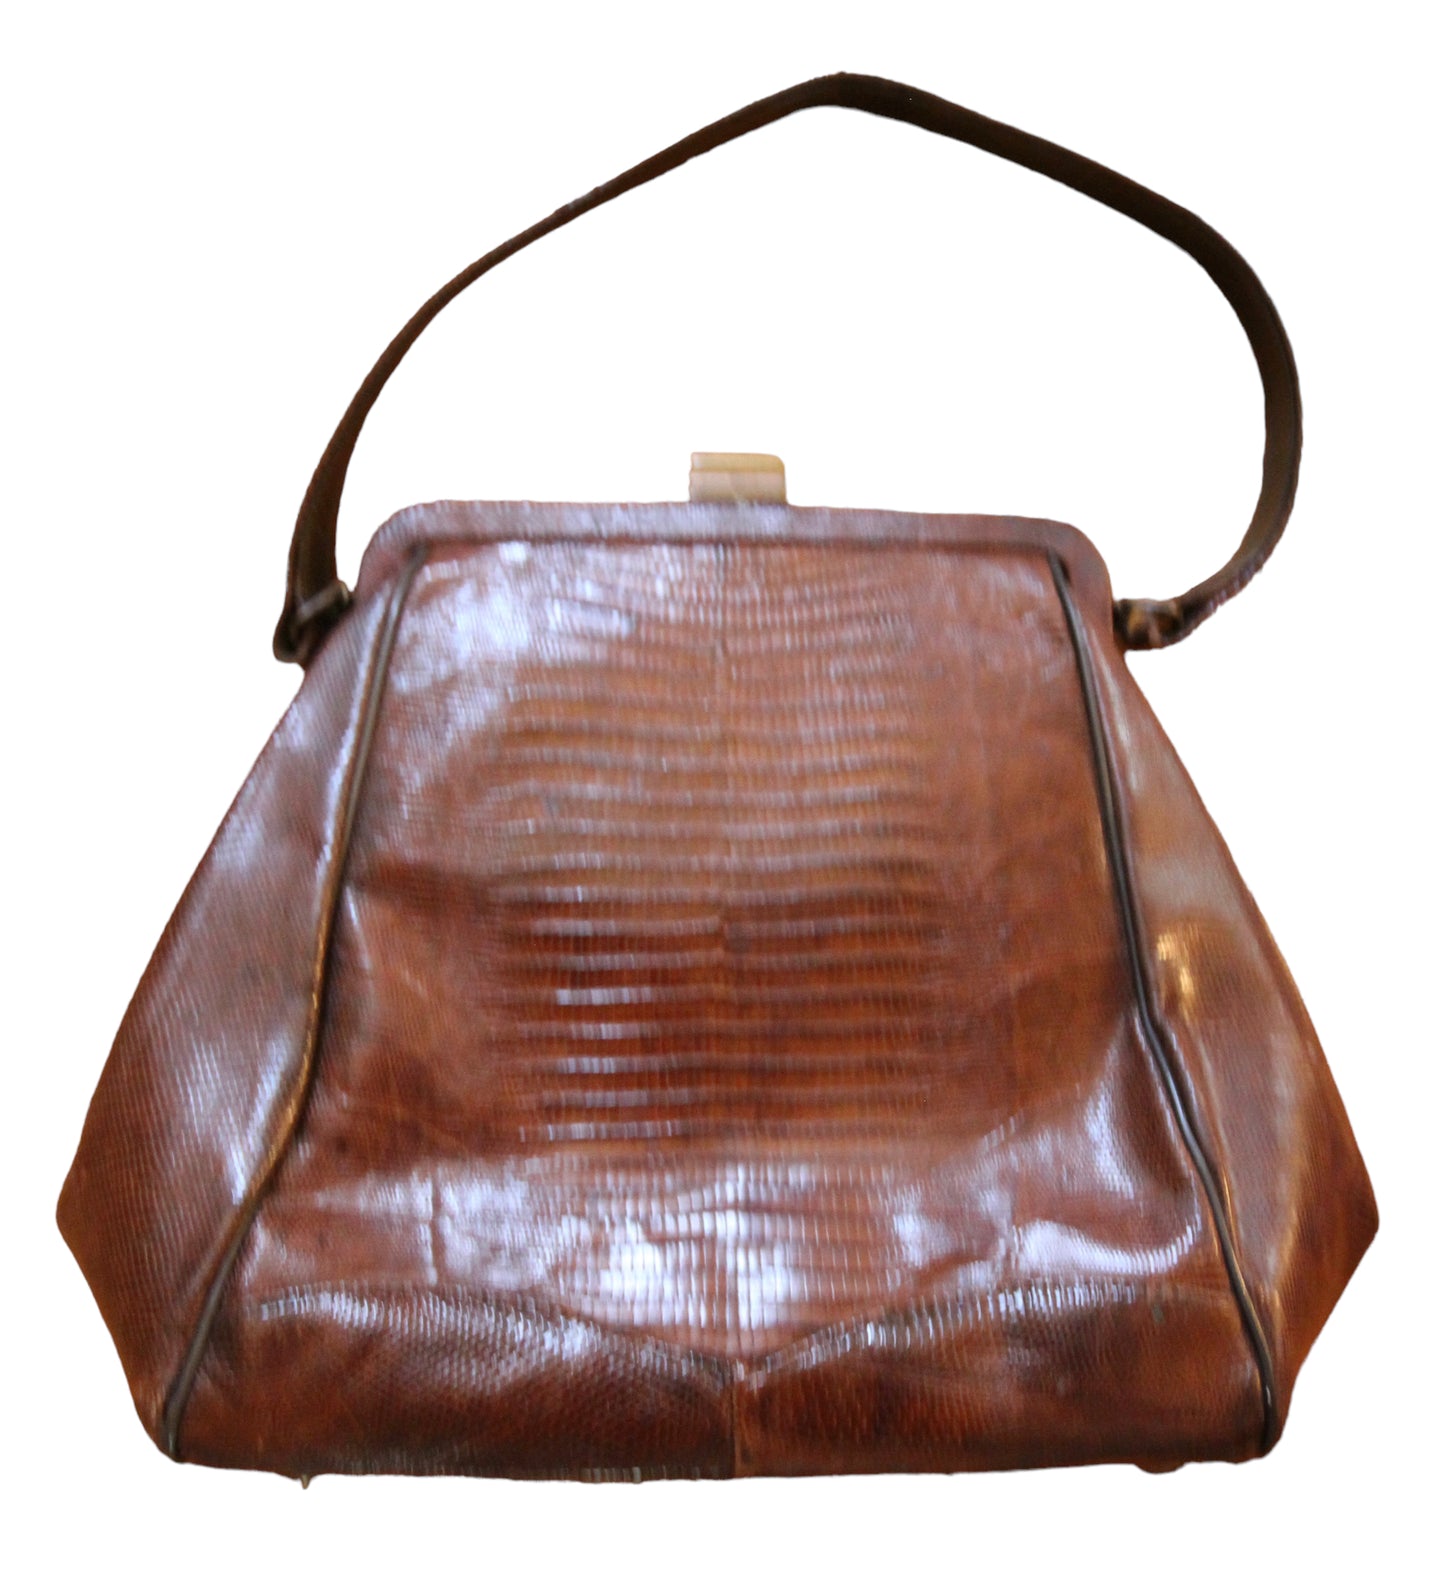 Gifting Vintage Handbag Chocolate Alligator Frame